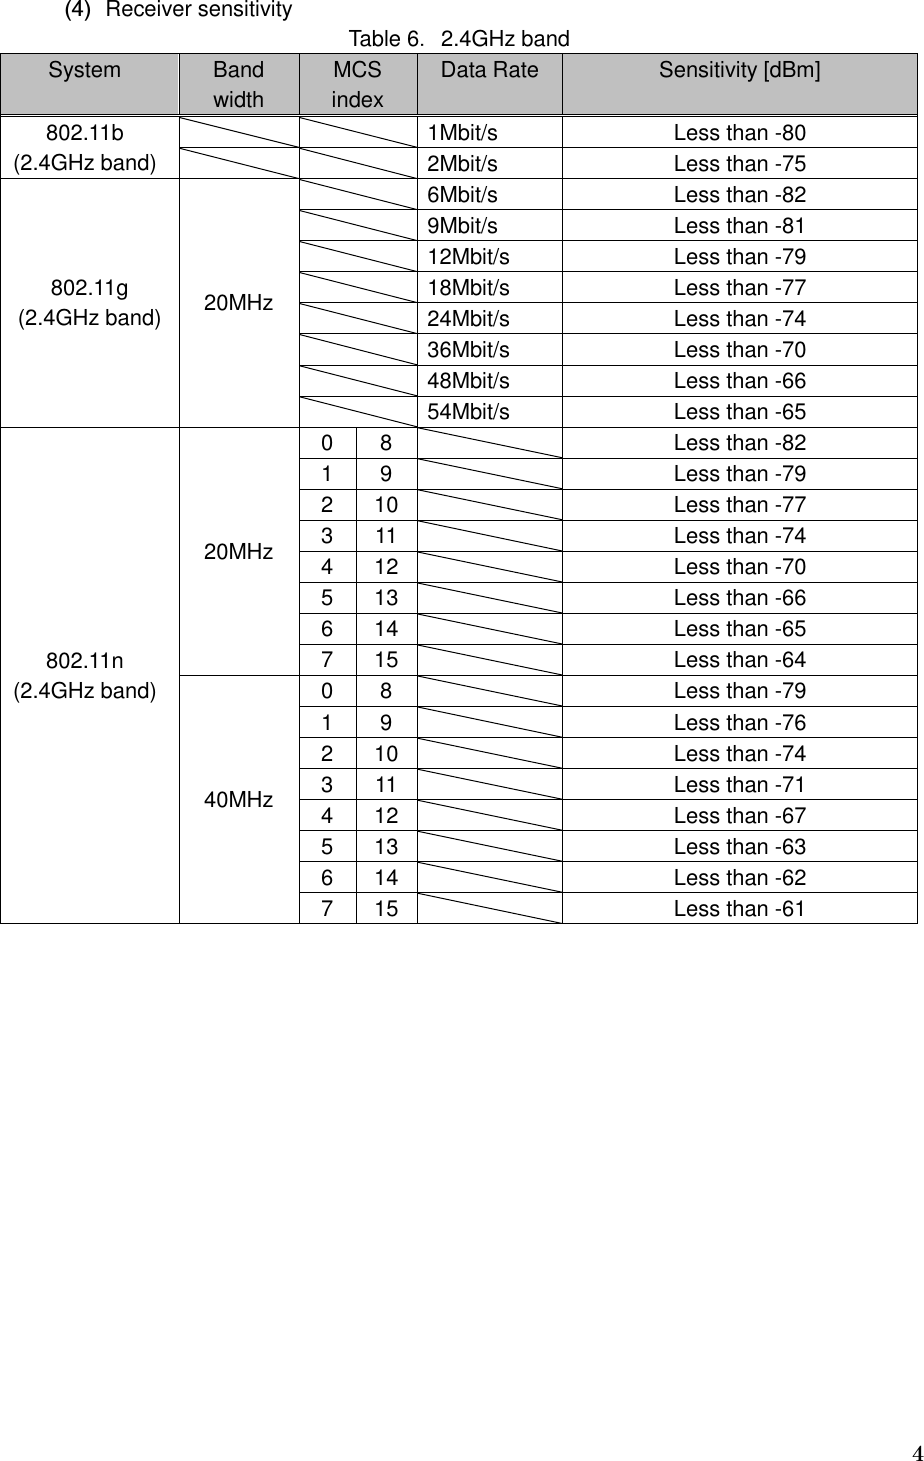   4  (4) Receiver sensitivity Table 6．2.4GHz band   System  Band width MCS index Data Rate  Sensitivity [dBm]   802.11b (2.4GHz band)     1Mbit/s  Less than -80     2Mbit/s  Less than -75 802.11g (2.4GHz band) 20MHz   6Mbit/s  Less than -82   9Mbit/s  Less than -81   12Mbit/s  Less than -79   18Mbit/s  Less than -77   24Mbit/s  Less than -74   36Mbit/s  Less than -70   48Mbit/s  Less than -66   54Mbit/s  Less than -65 802.11n (2.4GHz band) 20MHz 0  8    Less than -82 1  9    Less than -79 2  10   Less than -77 3  11    Less than -74 4  12   Less than -70 5  13   Less than -66 6  14   Less than -65 7  15   Less than -64 40MHz 0  8    Less than -79 1  9    Less than -76 2  10   Less than -74 3  11    Less than -71 4  12   Less than -67 5  13   Less than -63 6  14   Less than -62 7  15   Less than -61  